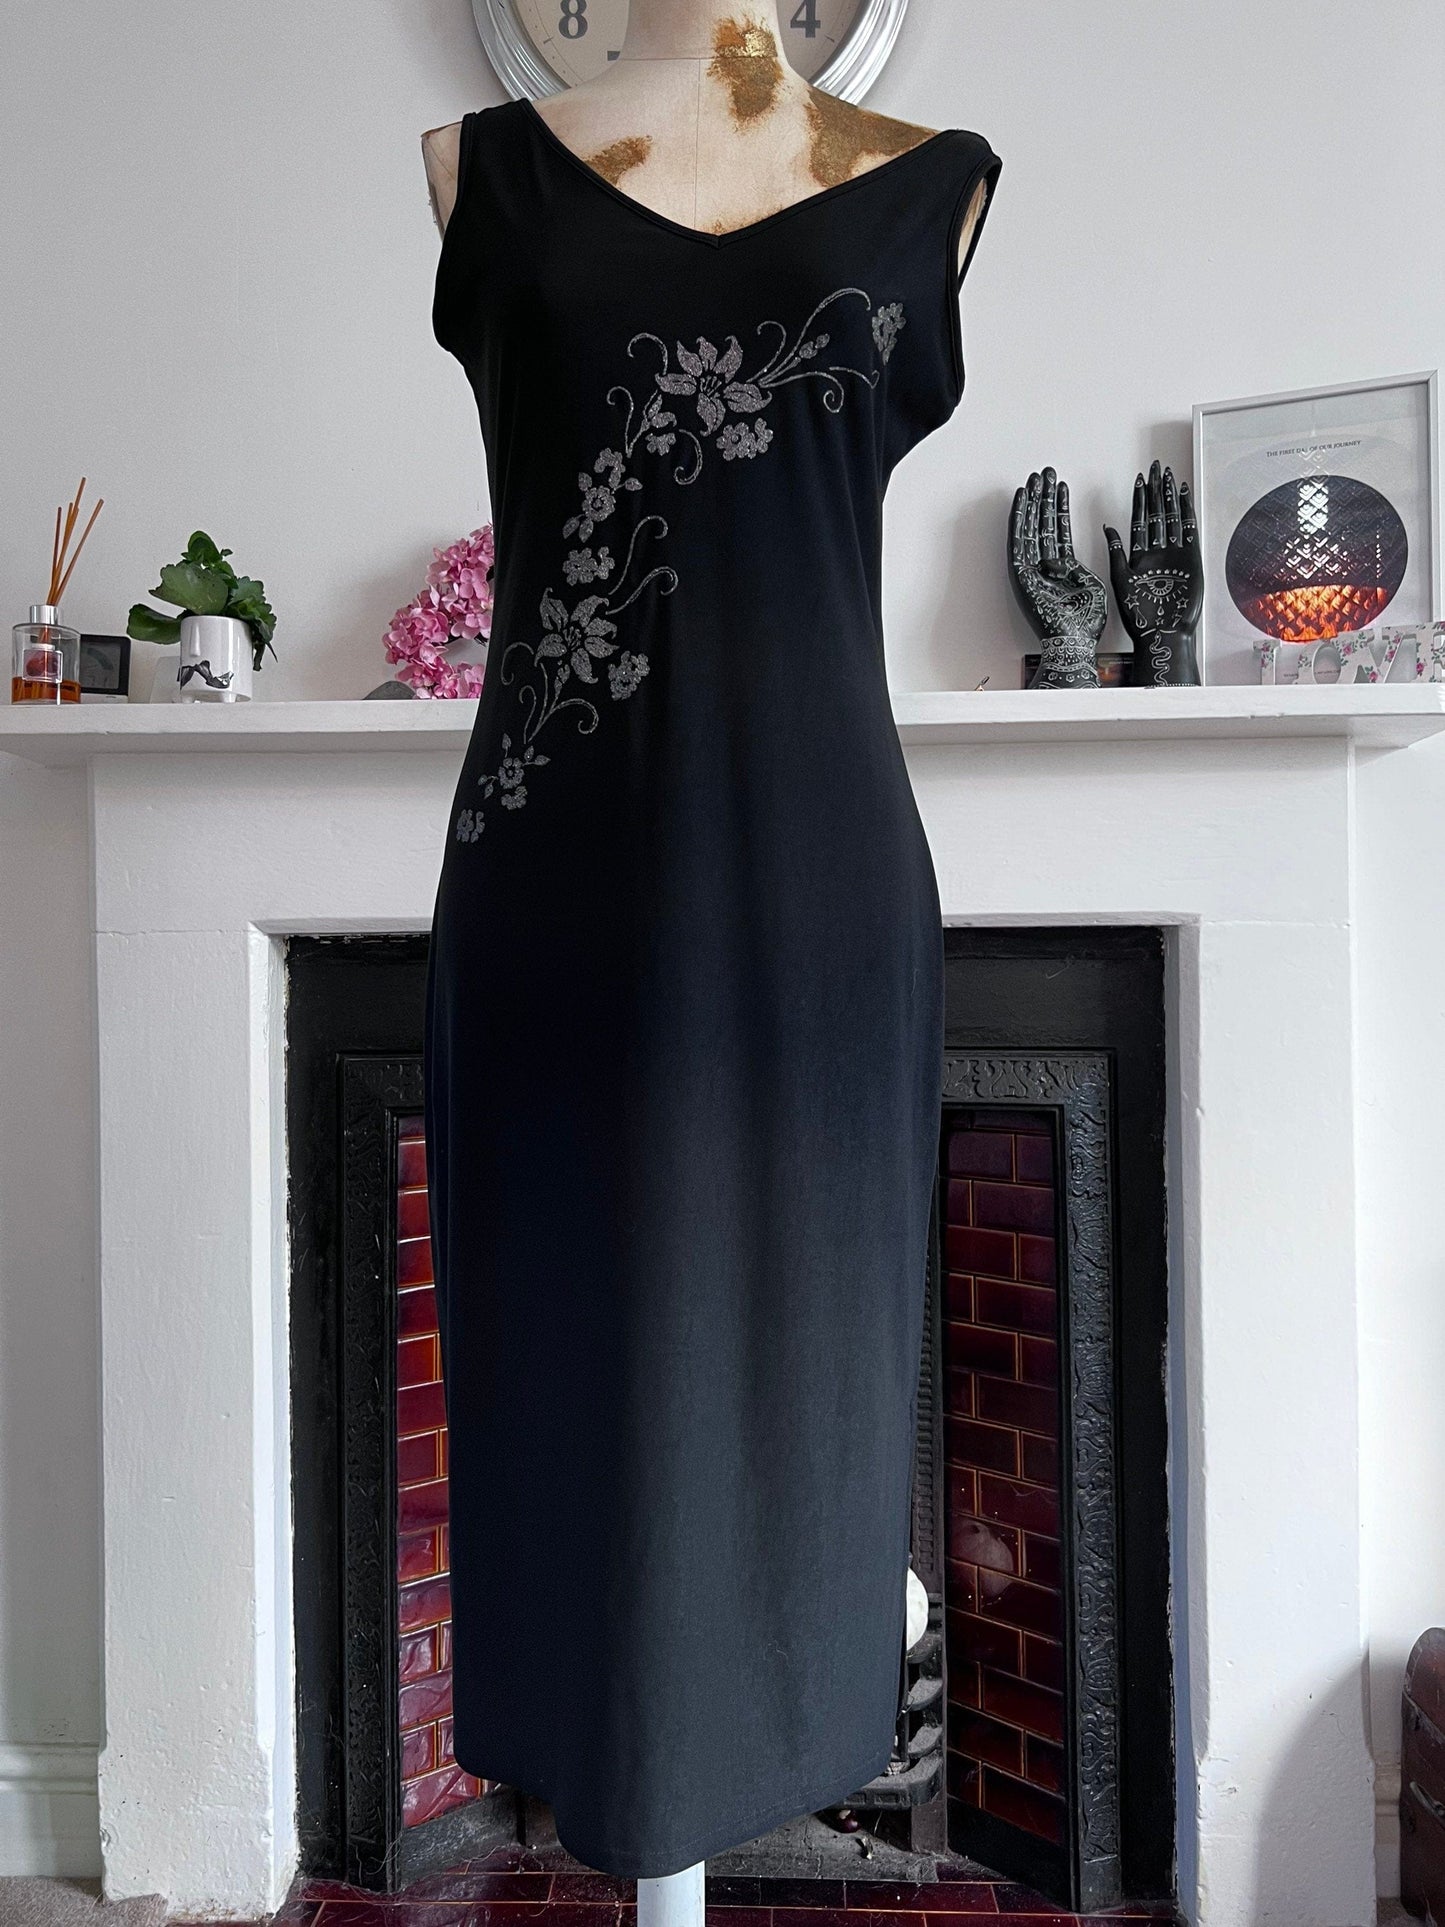 Vintage Black Silver Floral midi Dress - Size UK8/12 Stretch Lycra Body Con Black & Silver Dress with side split